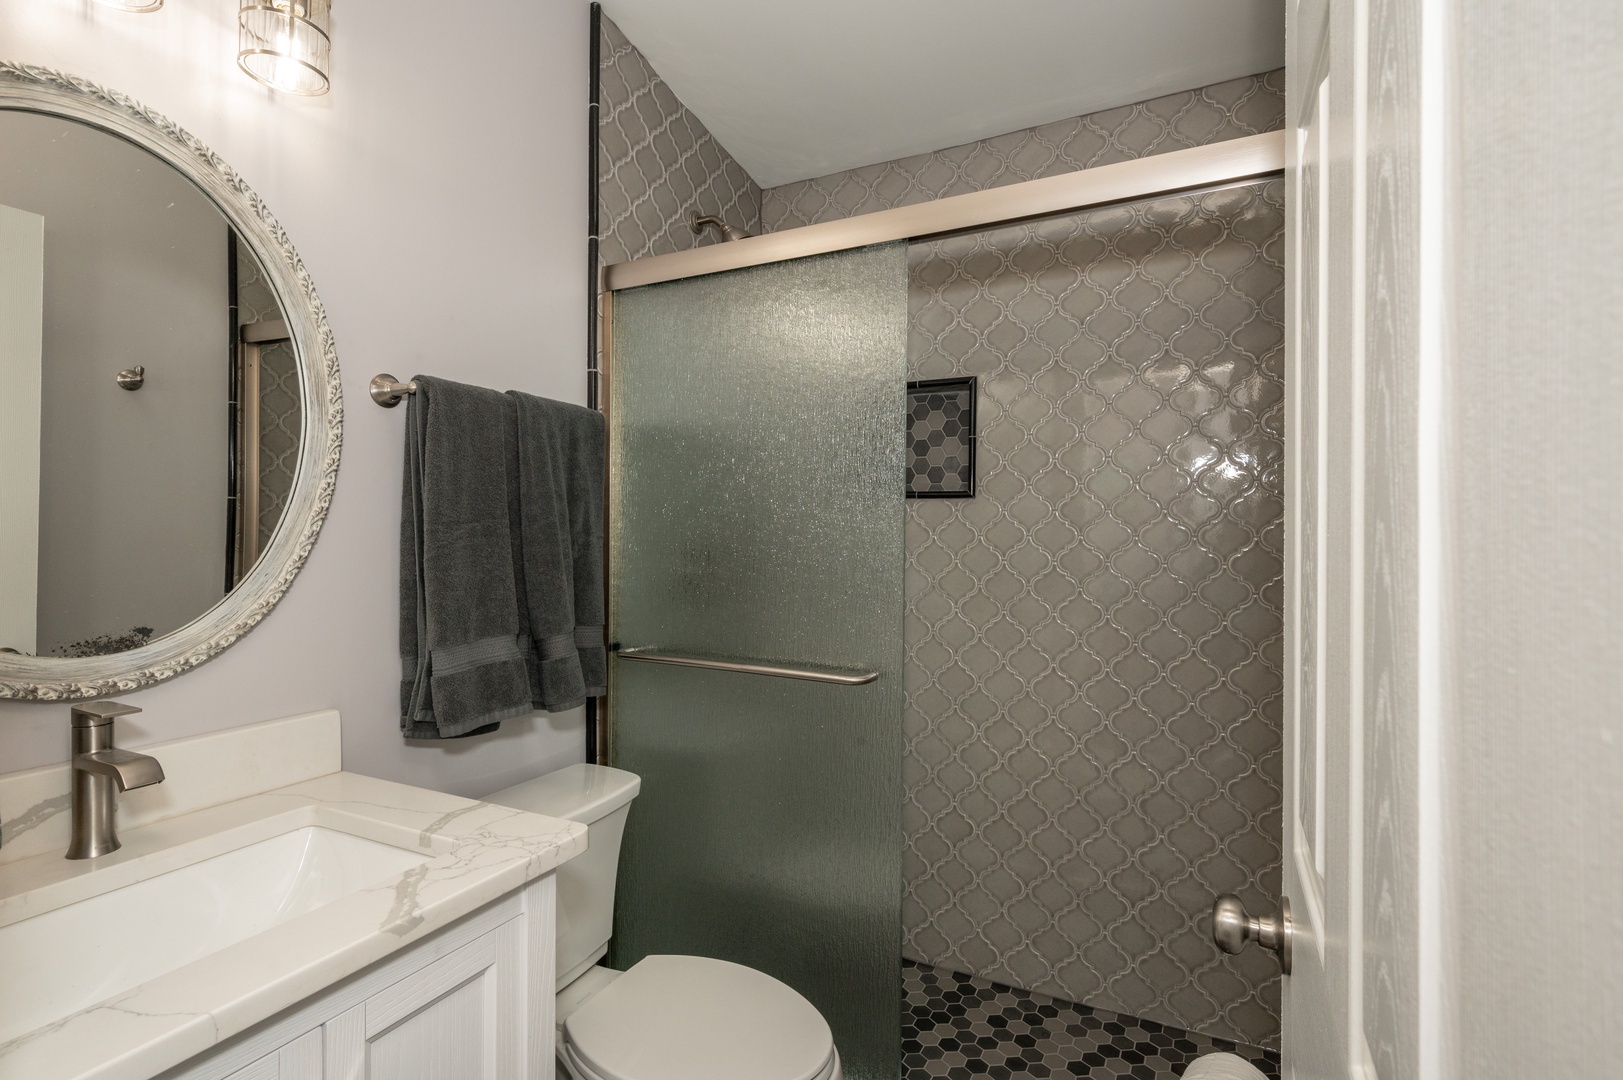 Apt 2 – The full bathroom includes an elegant single vanity & walk-in shower